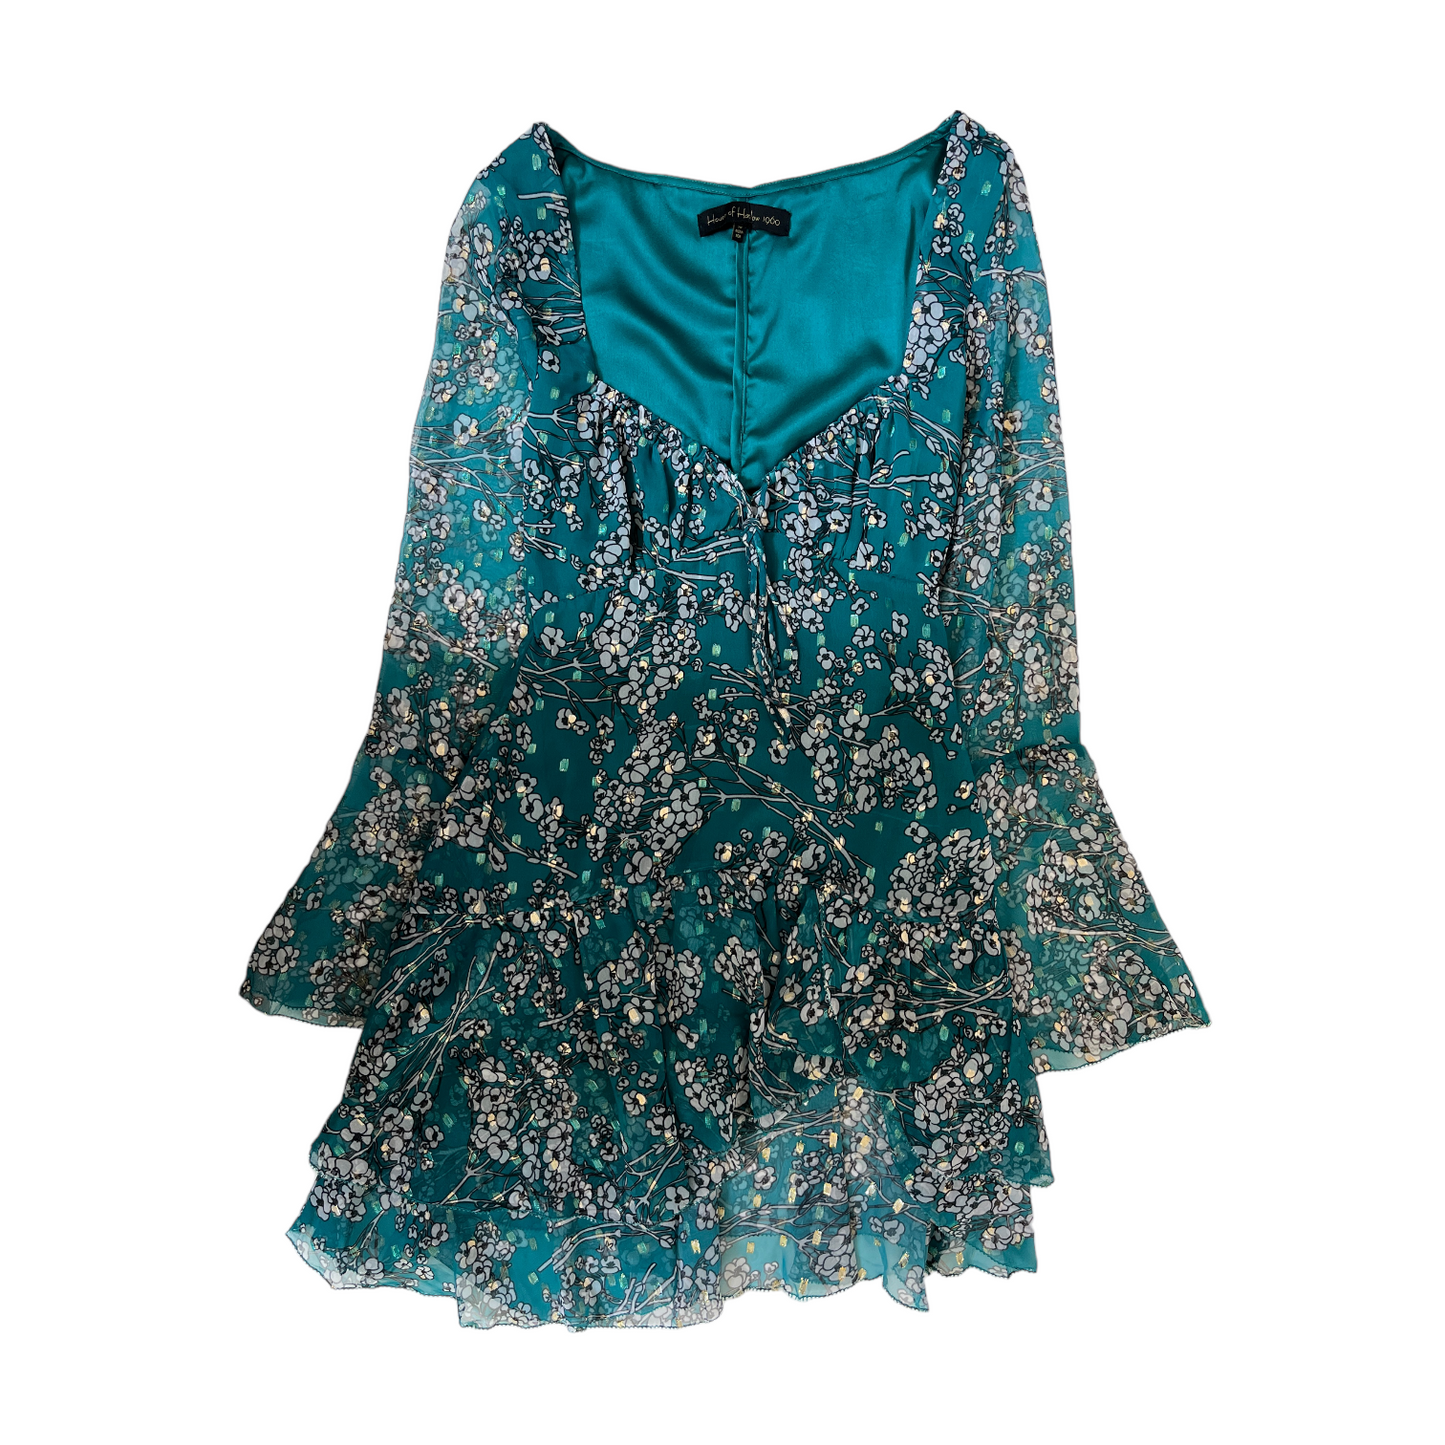 House of Harlow 1960 x REVOLVE Vaida Mini Dress in Teal Floral Multi